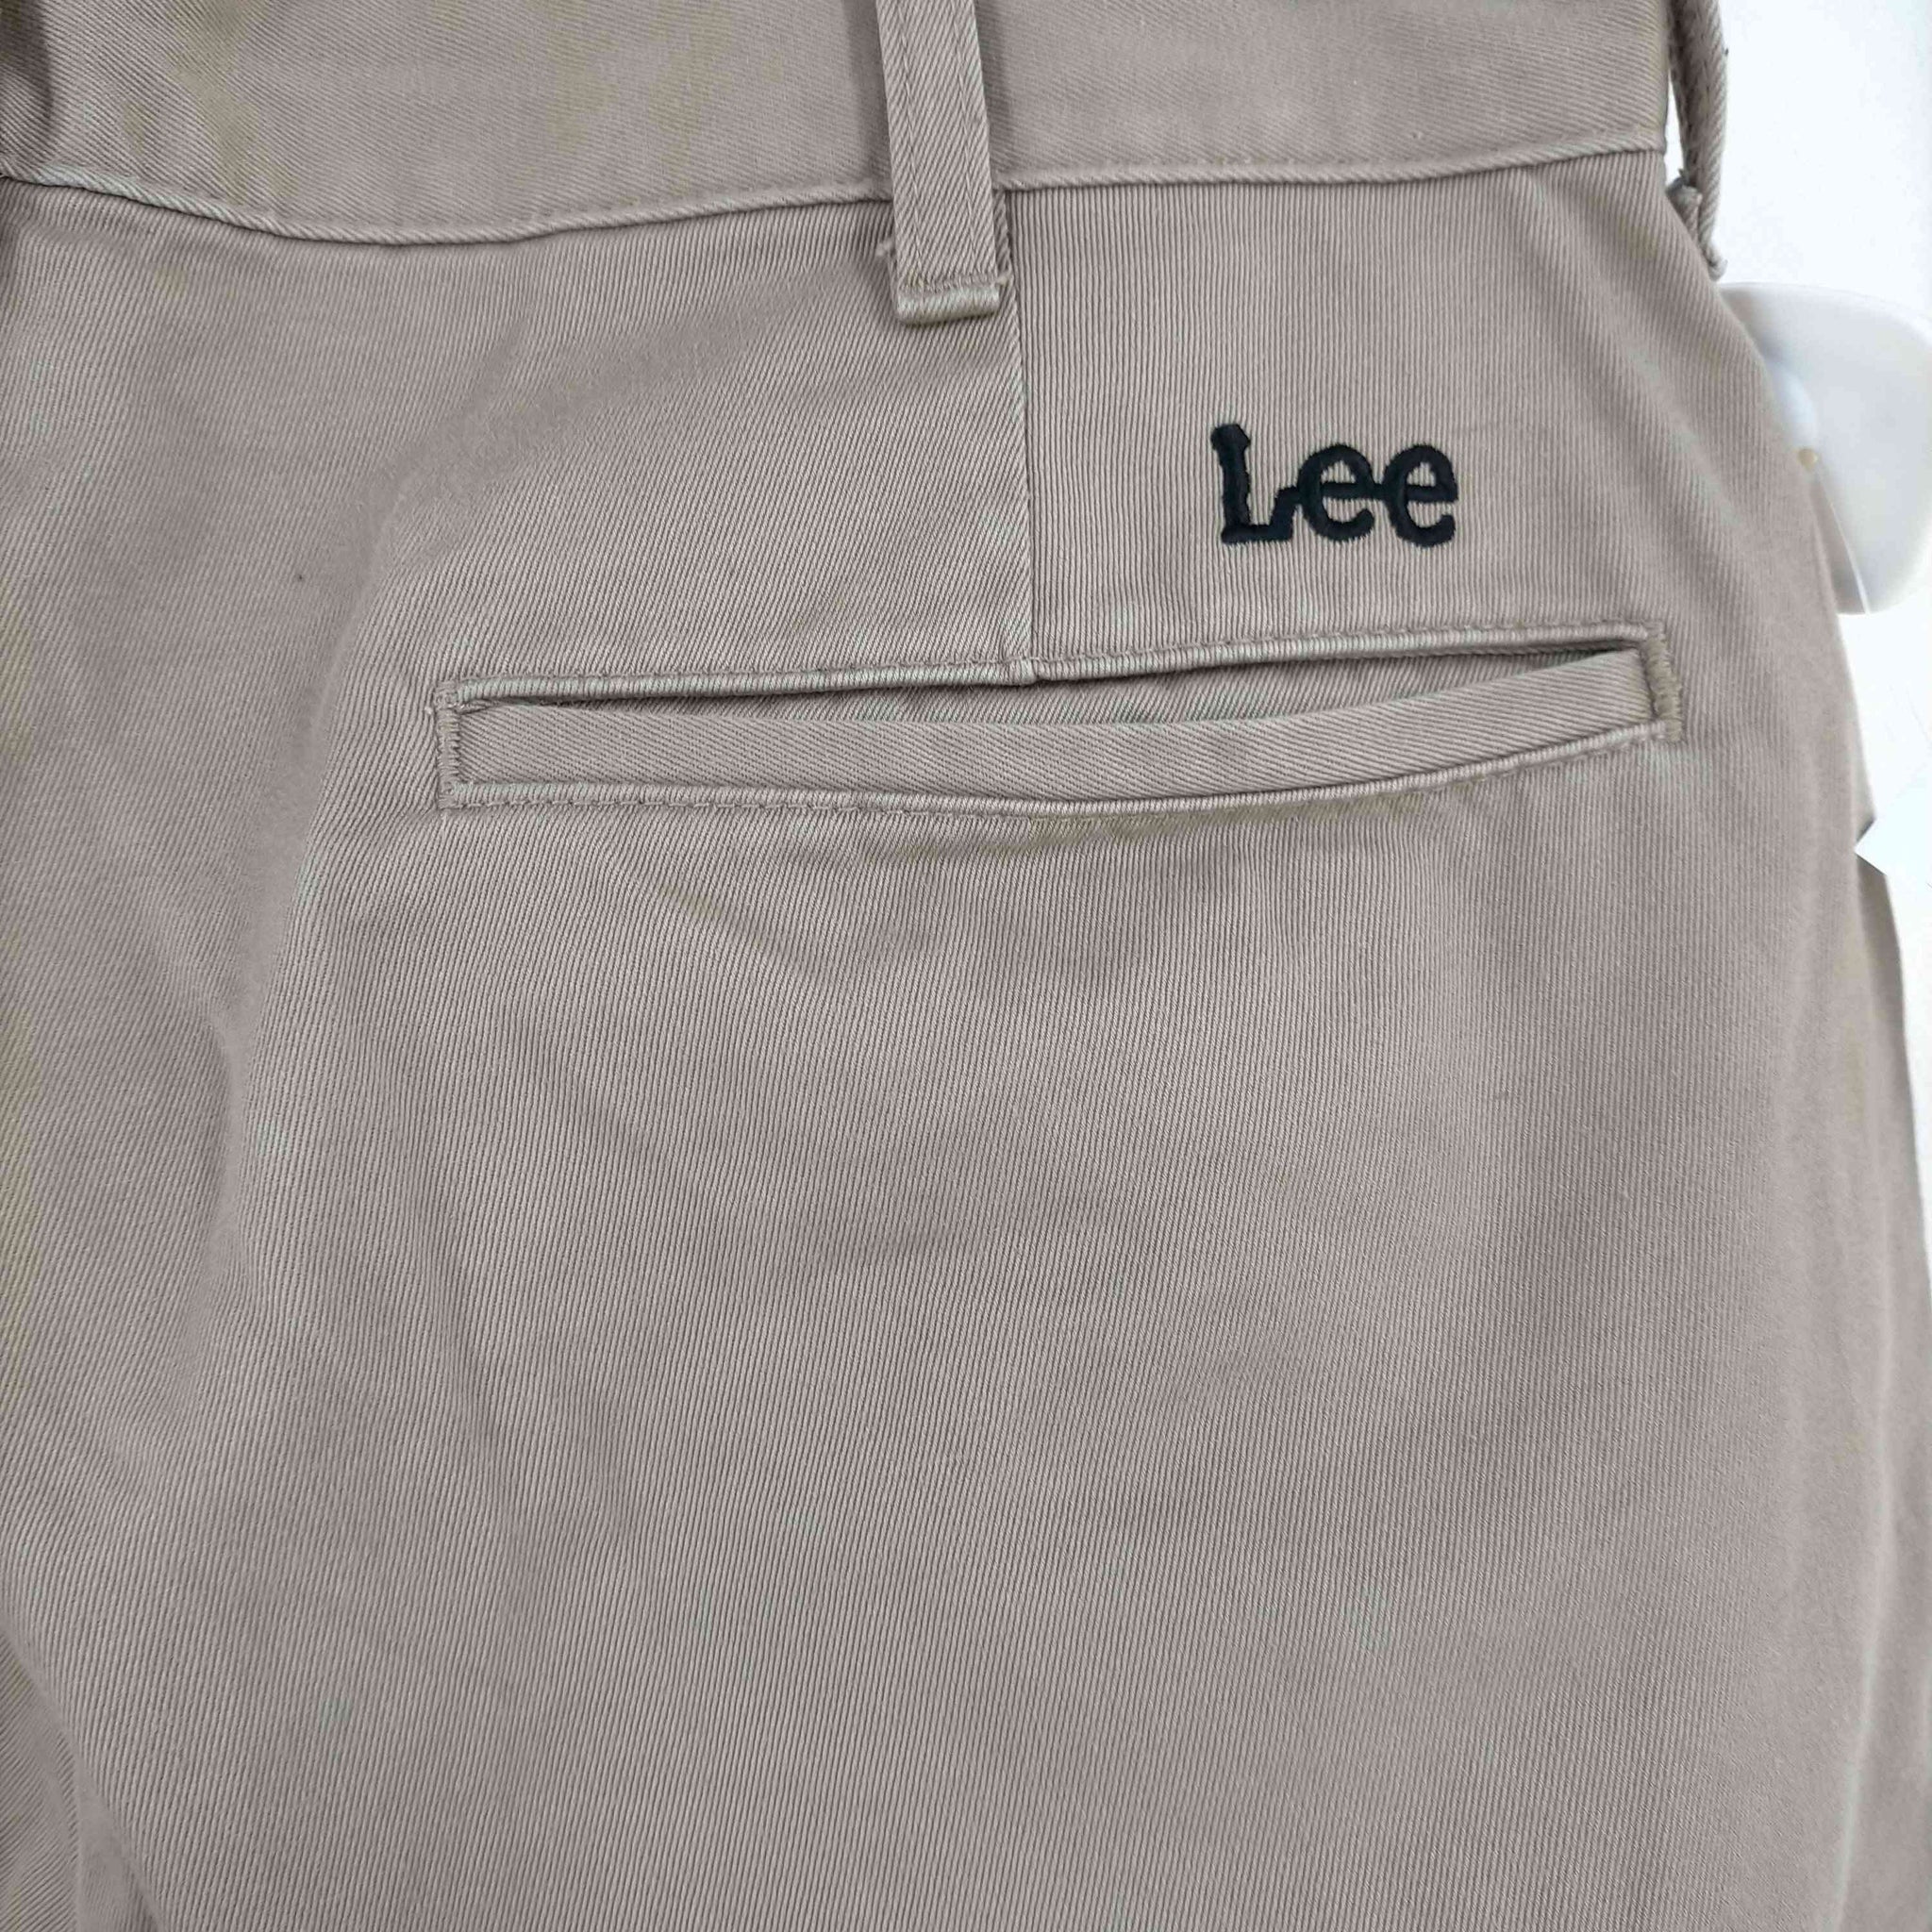 Lee(リー)BACK LOGO TROUSERS